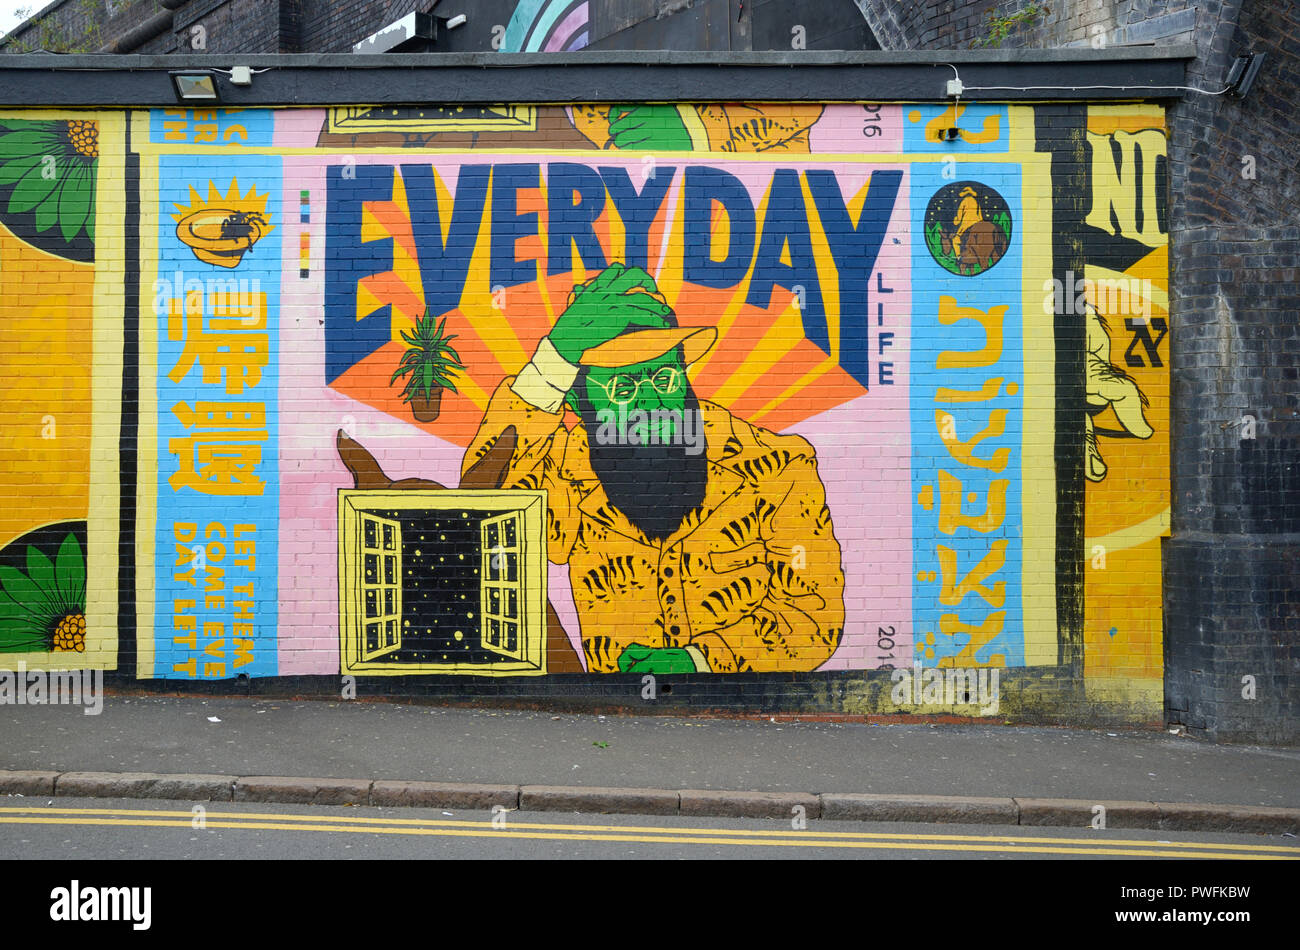 Everyday Life Street Art or Wall Painting Digbeth Birmingham England Stock Photo